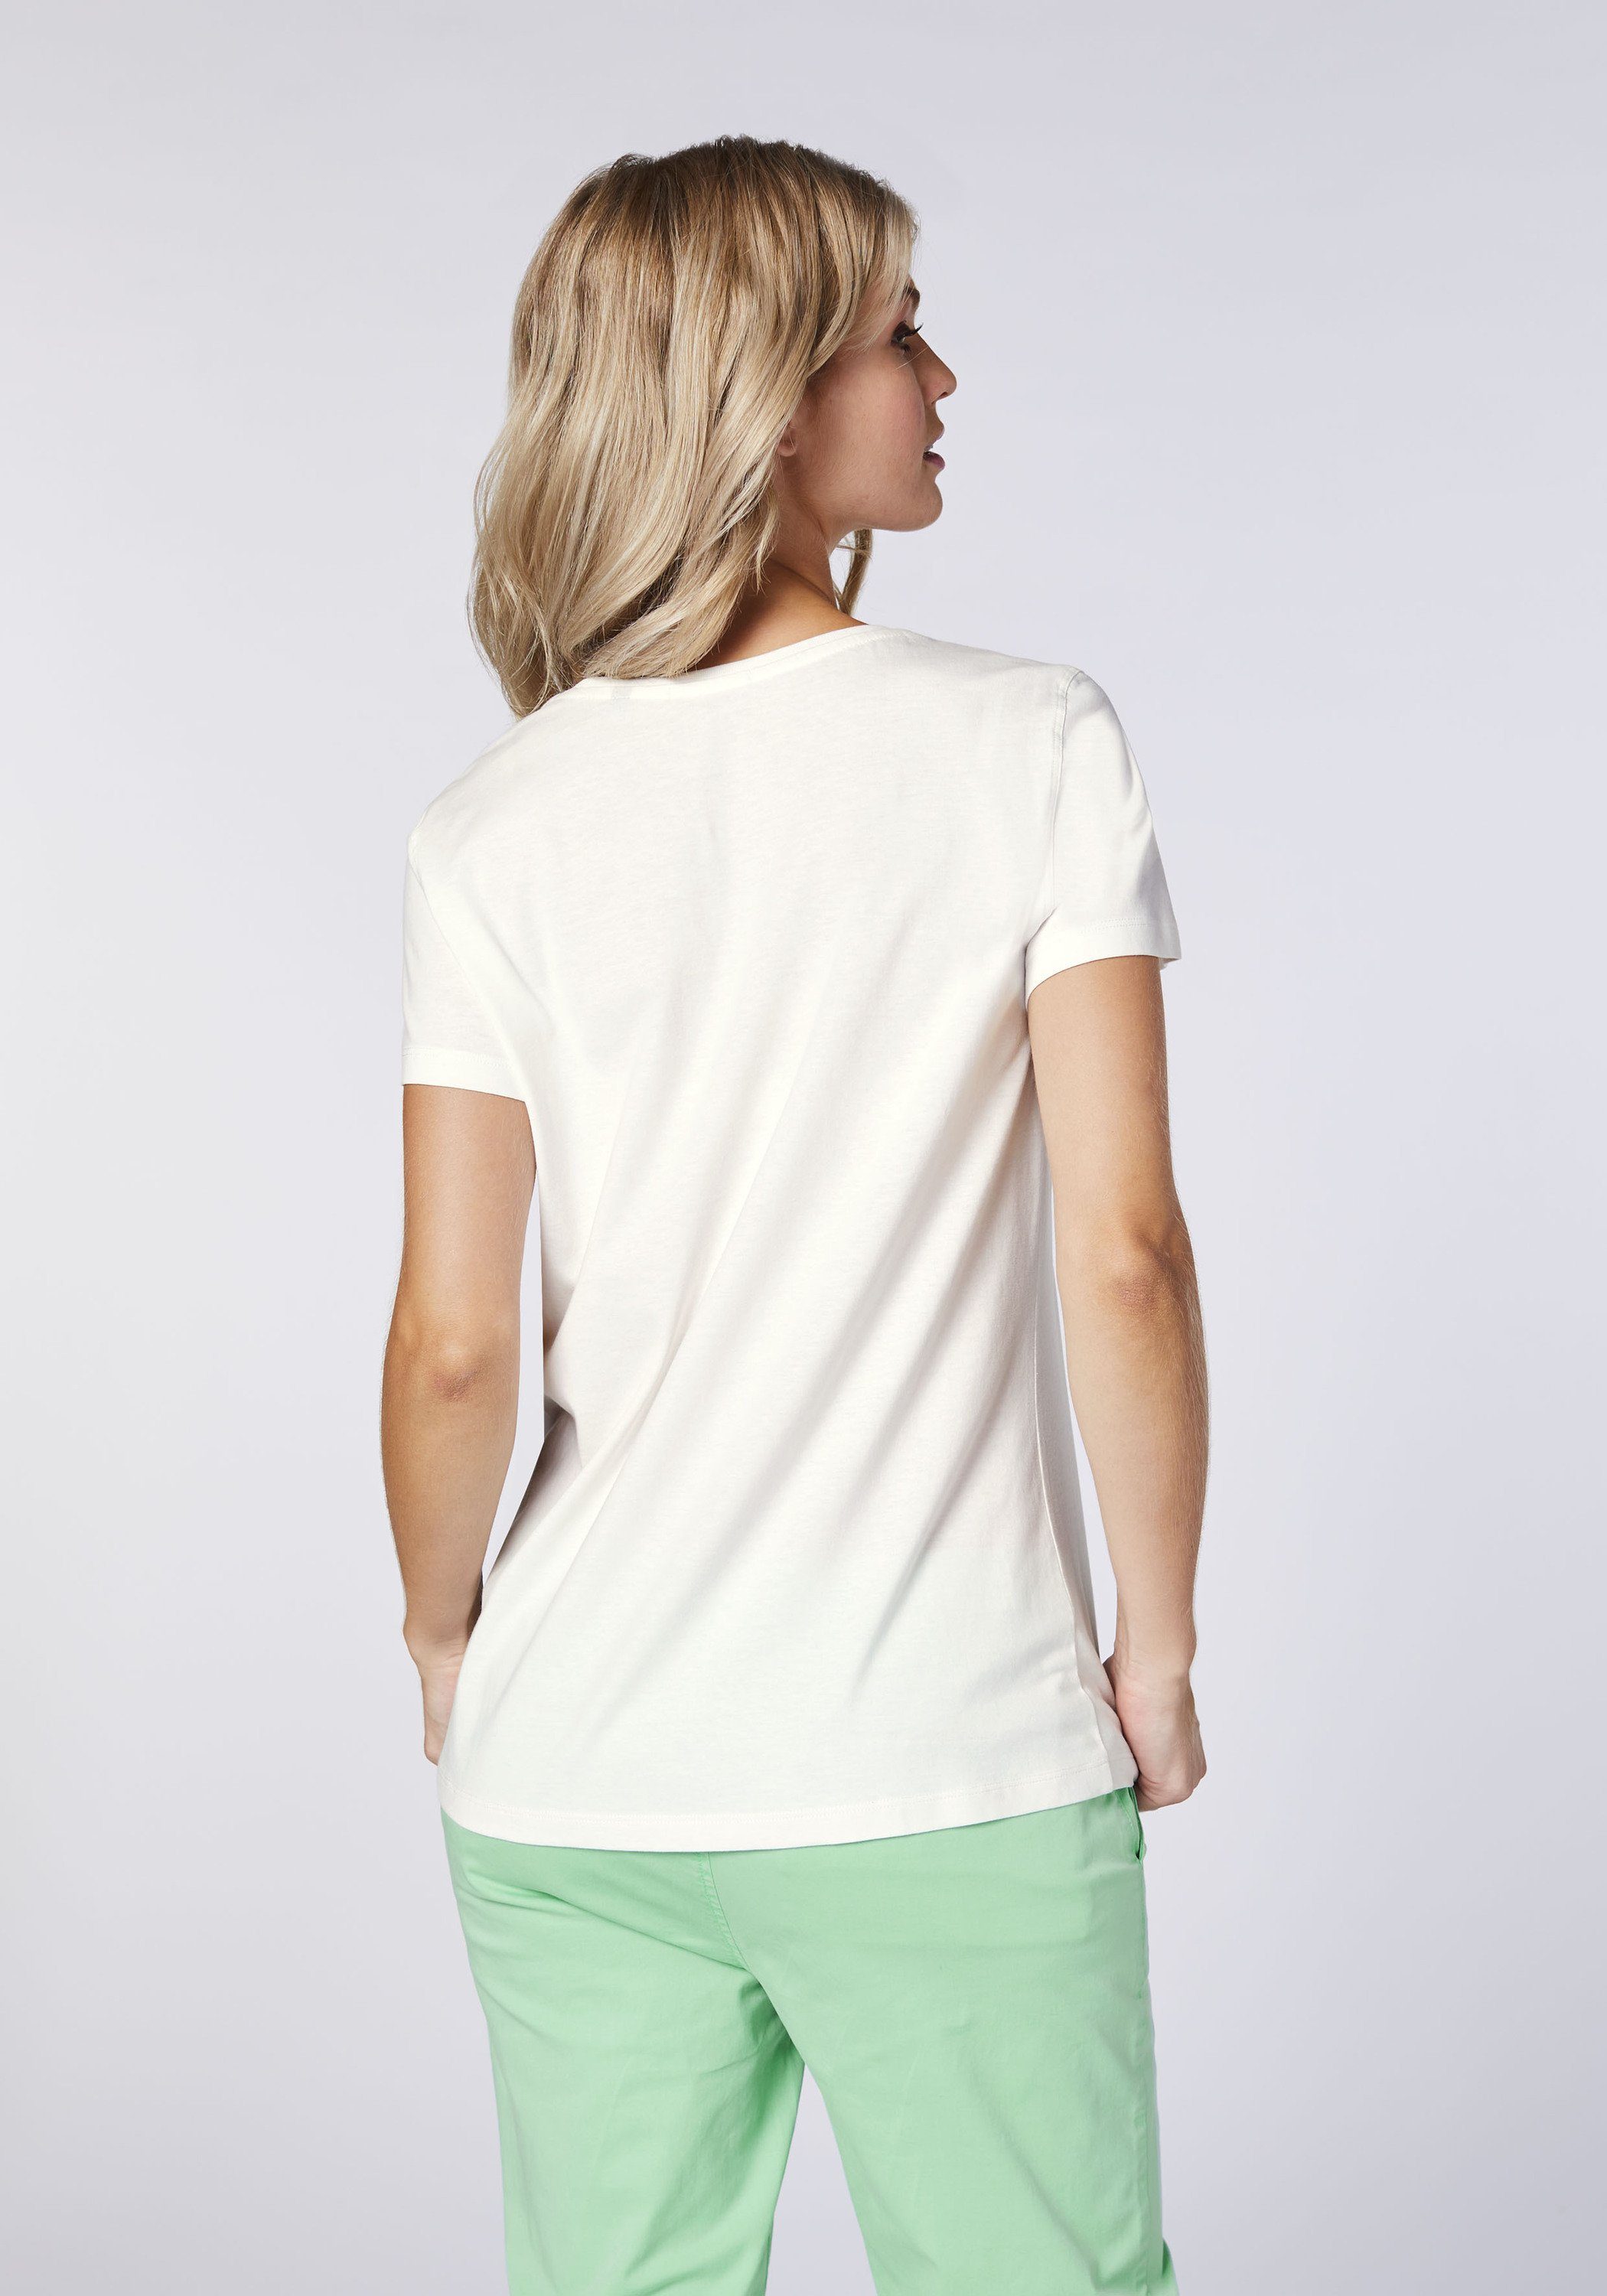 Chiemsee Print-Shirt T-Shirt mit Pink White/Light 1 farbenfrohem Frontprint